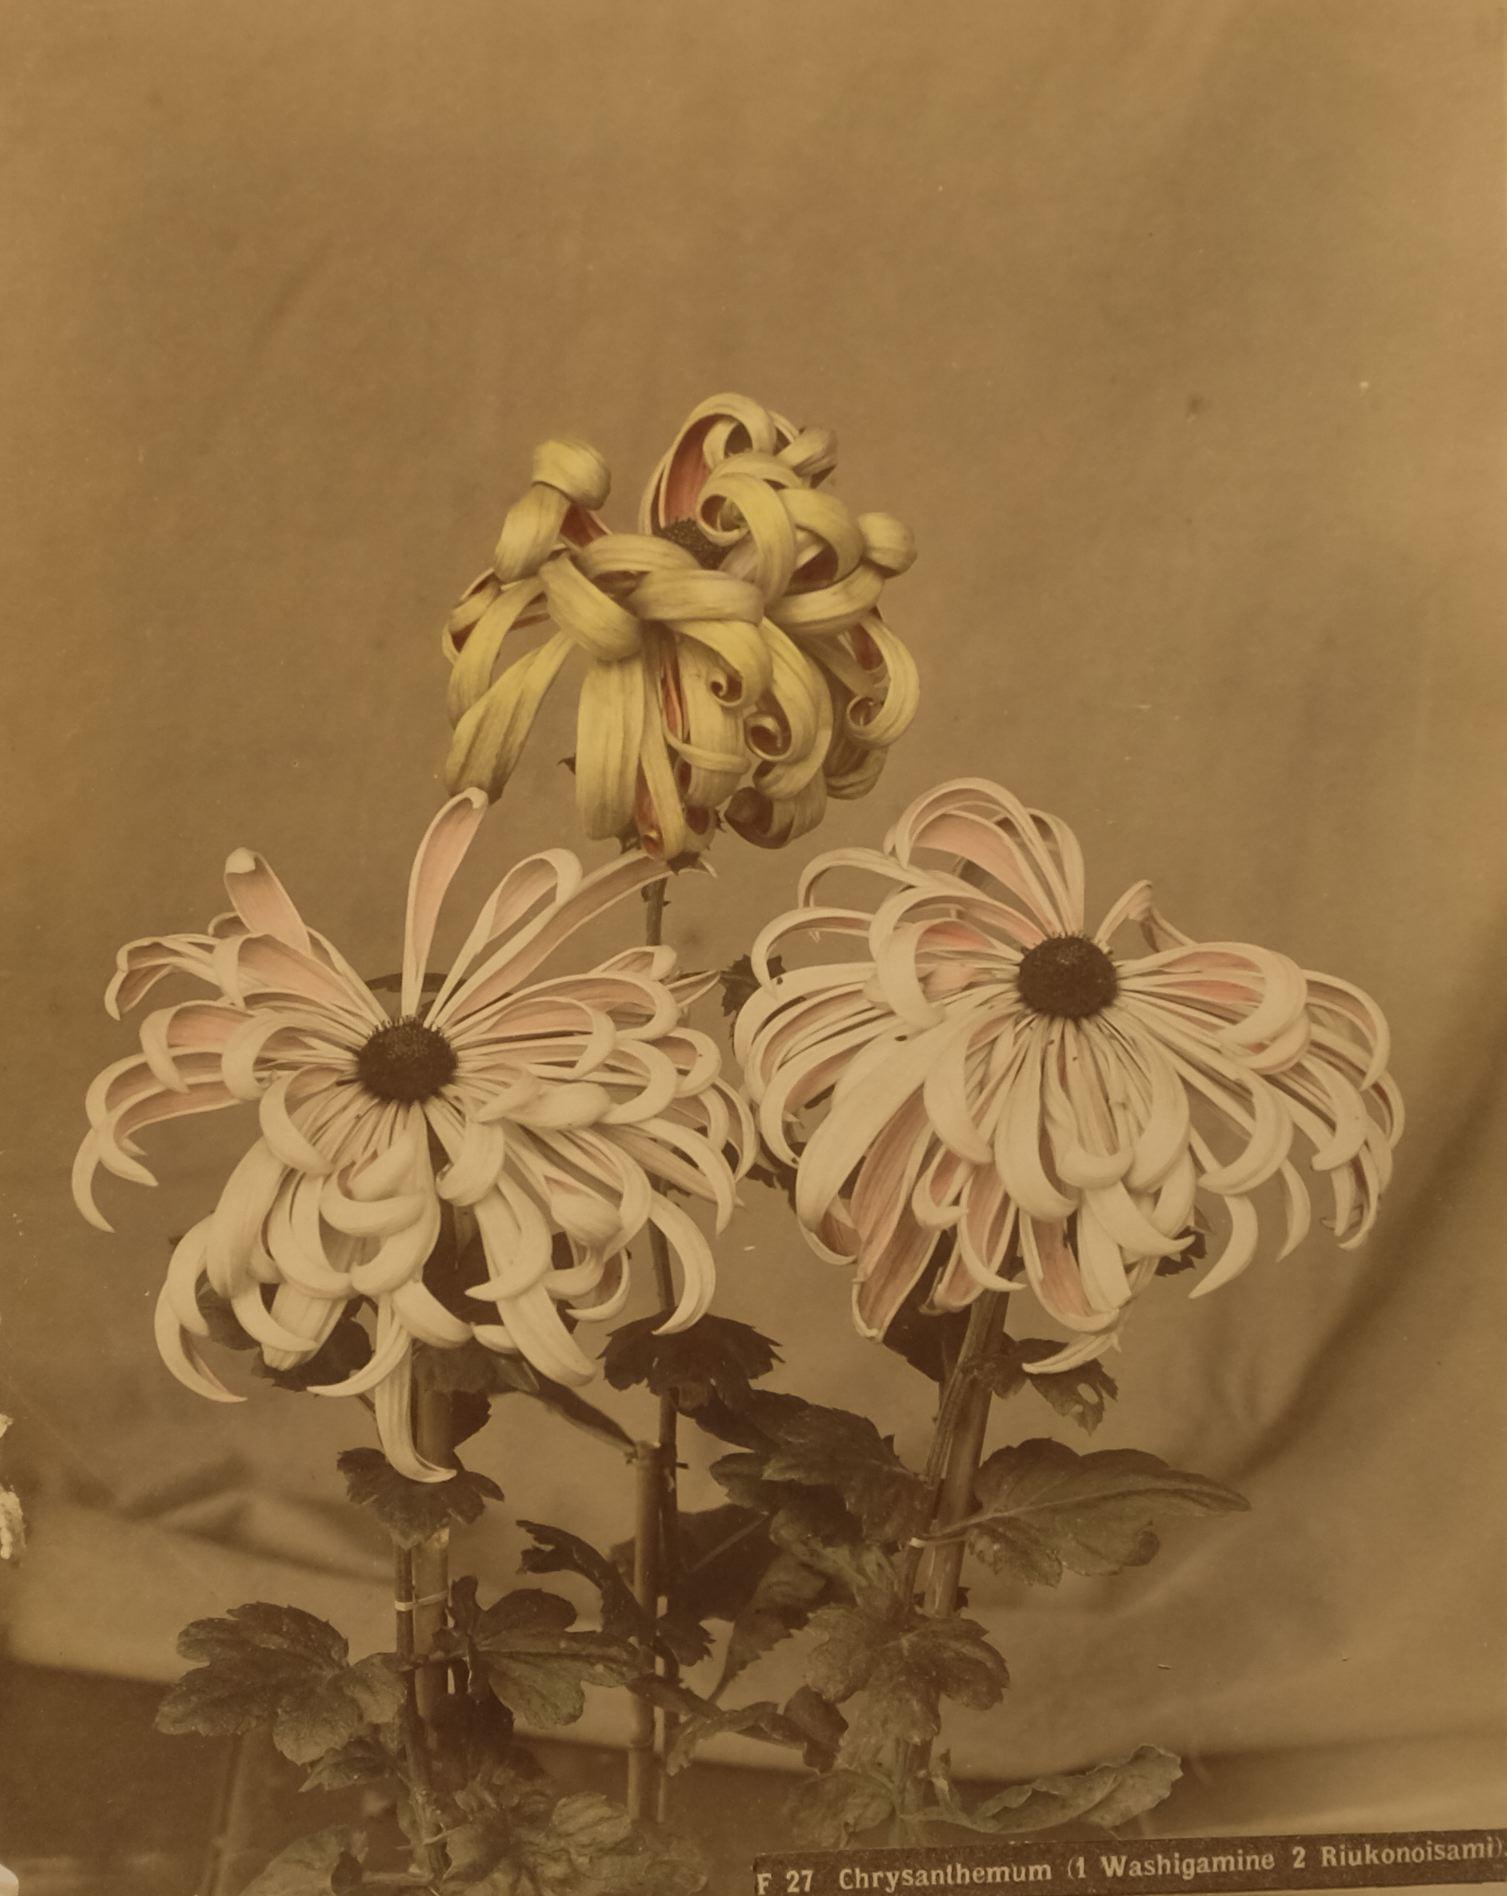 Unidentified Photographer Color Photograph - Chrysanthemum (1 Washigamine 2 Riukonoisami), c. 1880's